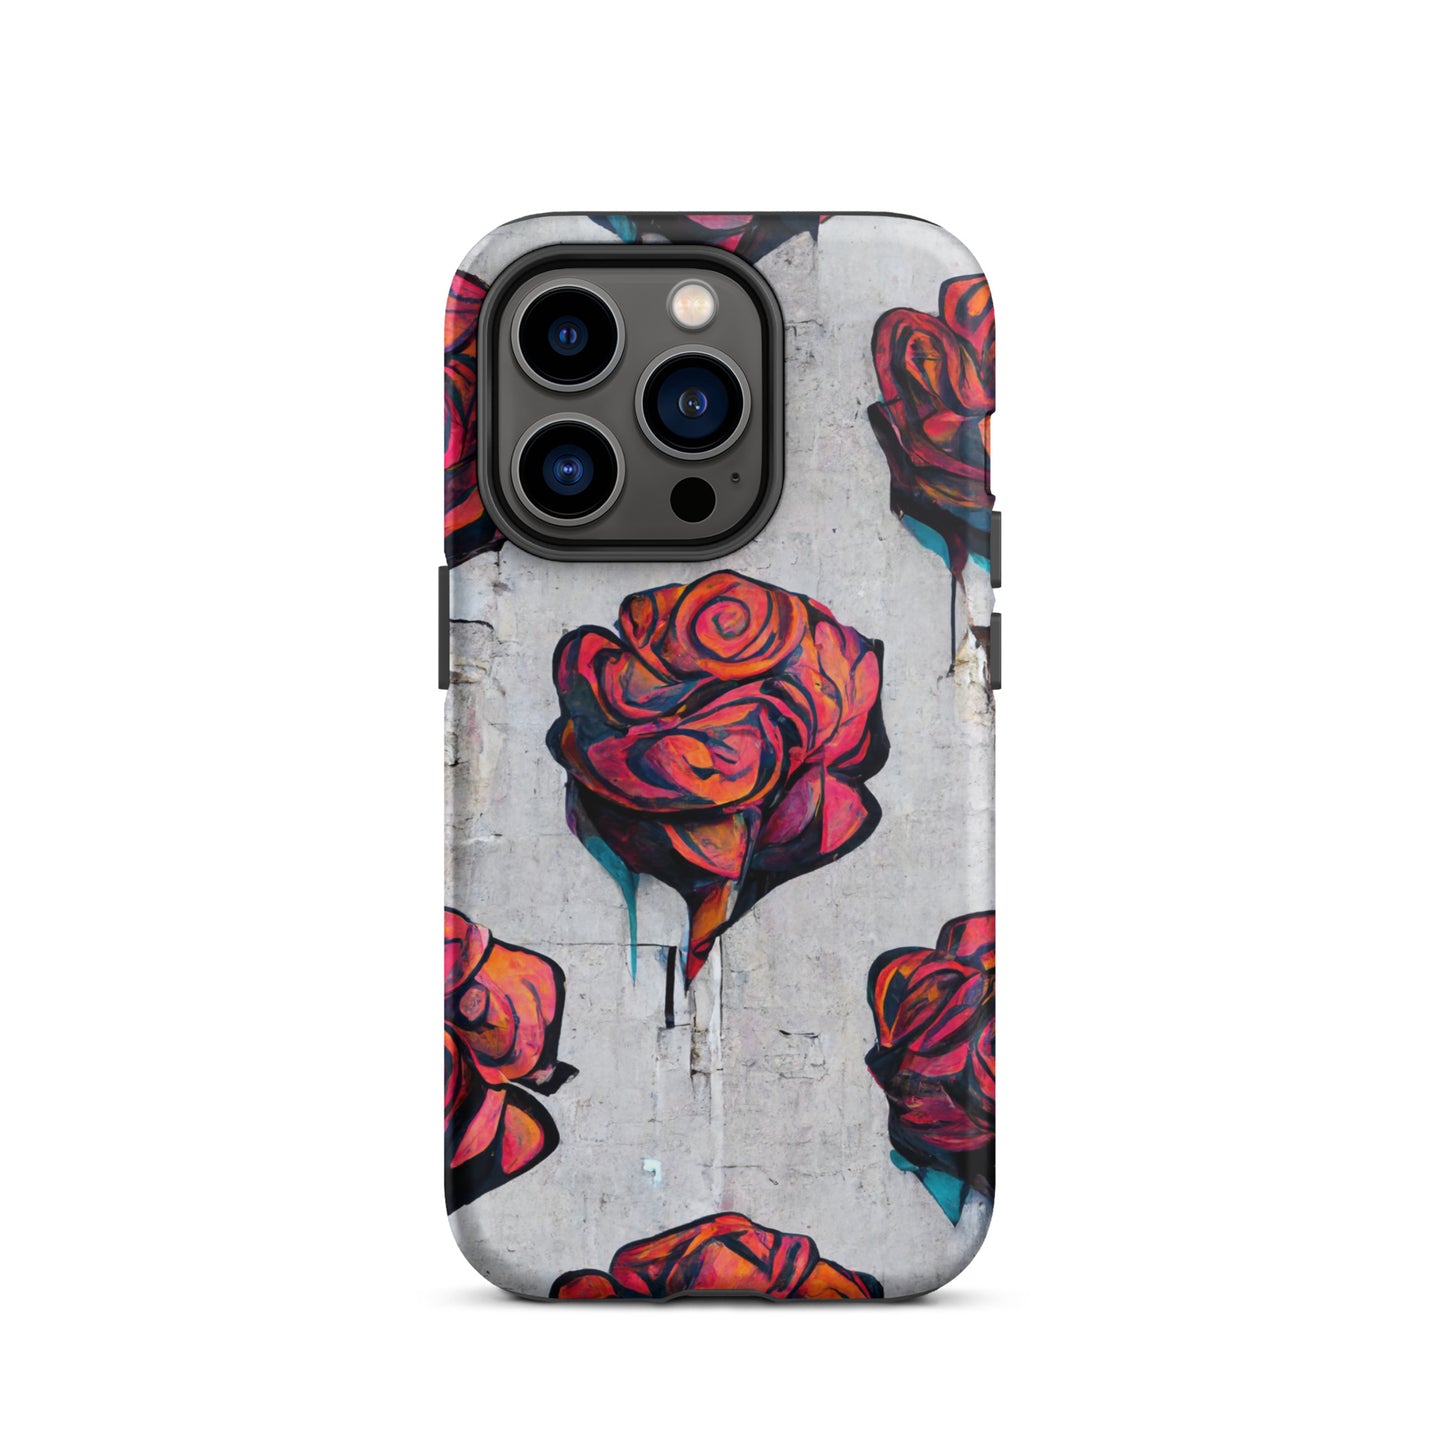 Neduz Designs Artified Graffiti Roses Tough iPhone kılıfı